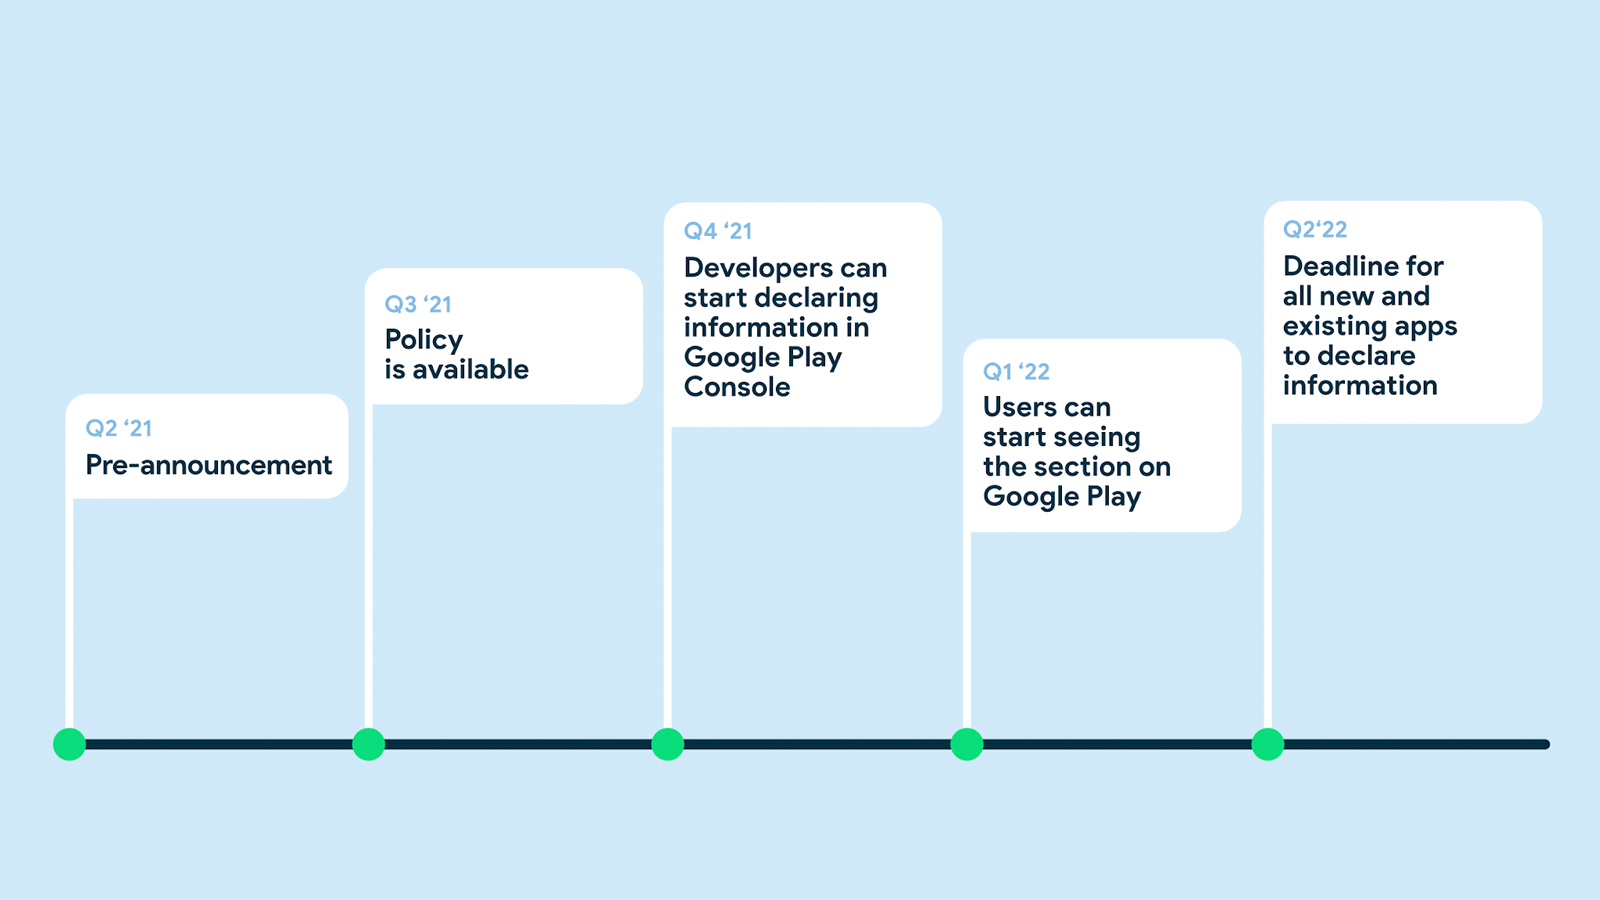 Google's implementation timeline for safety section